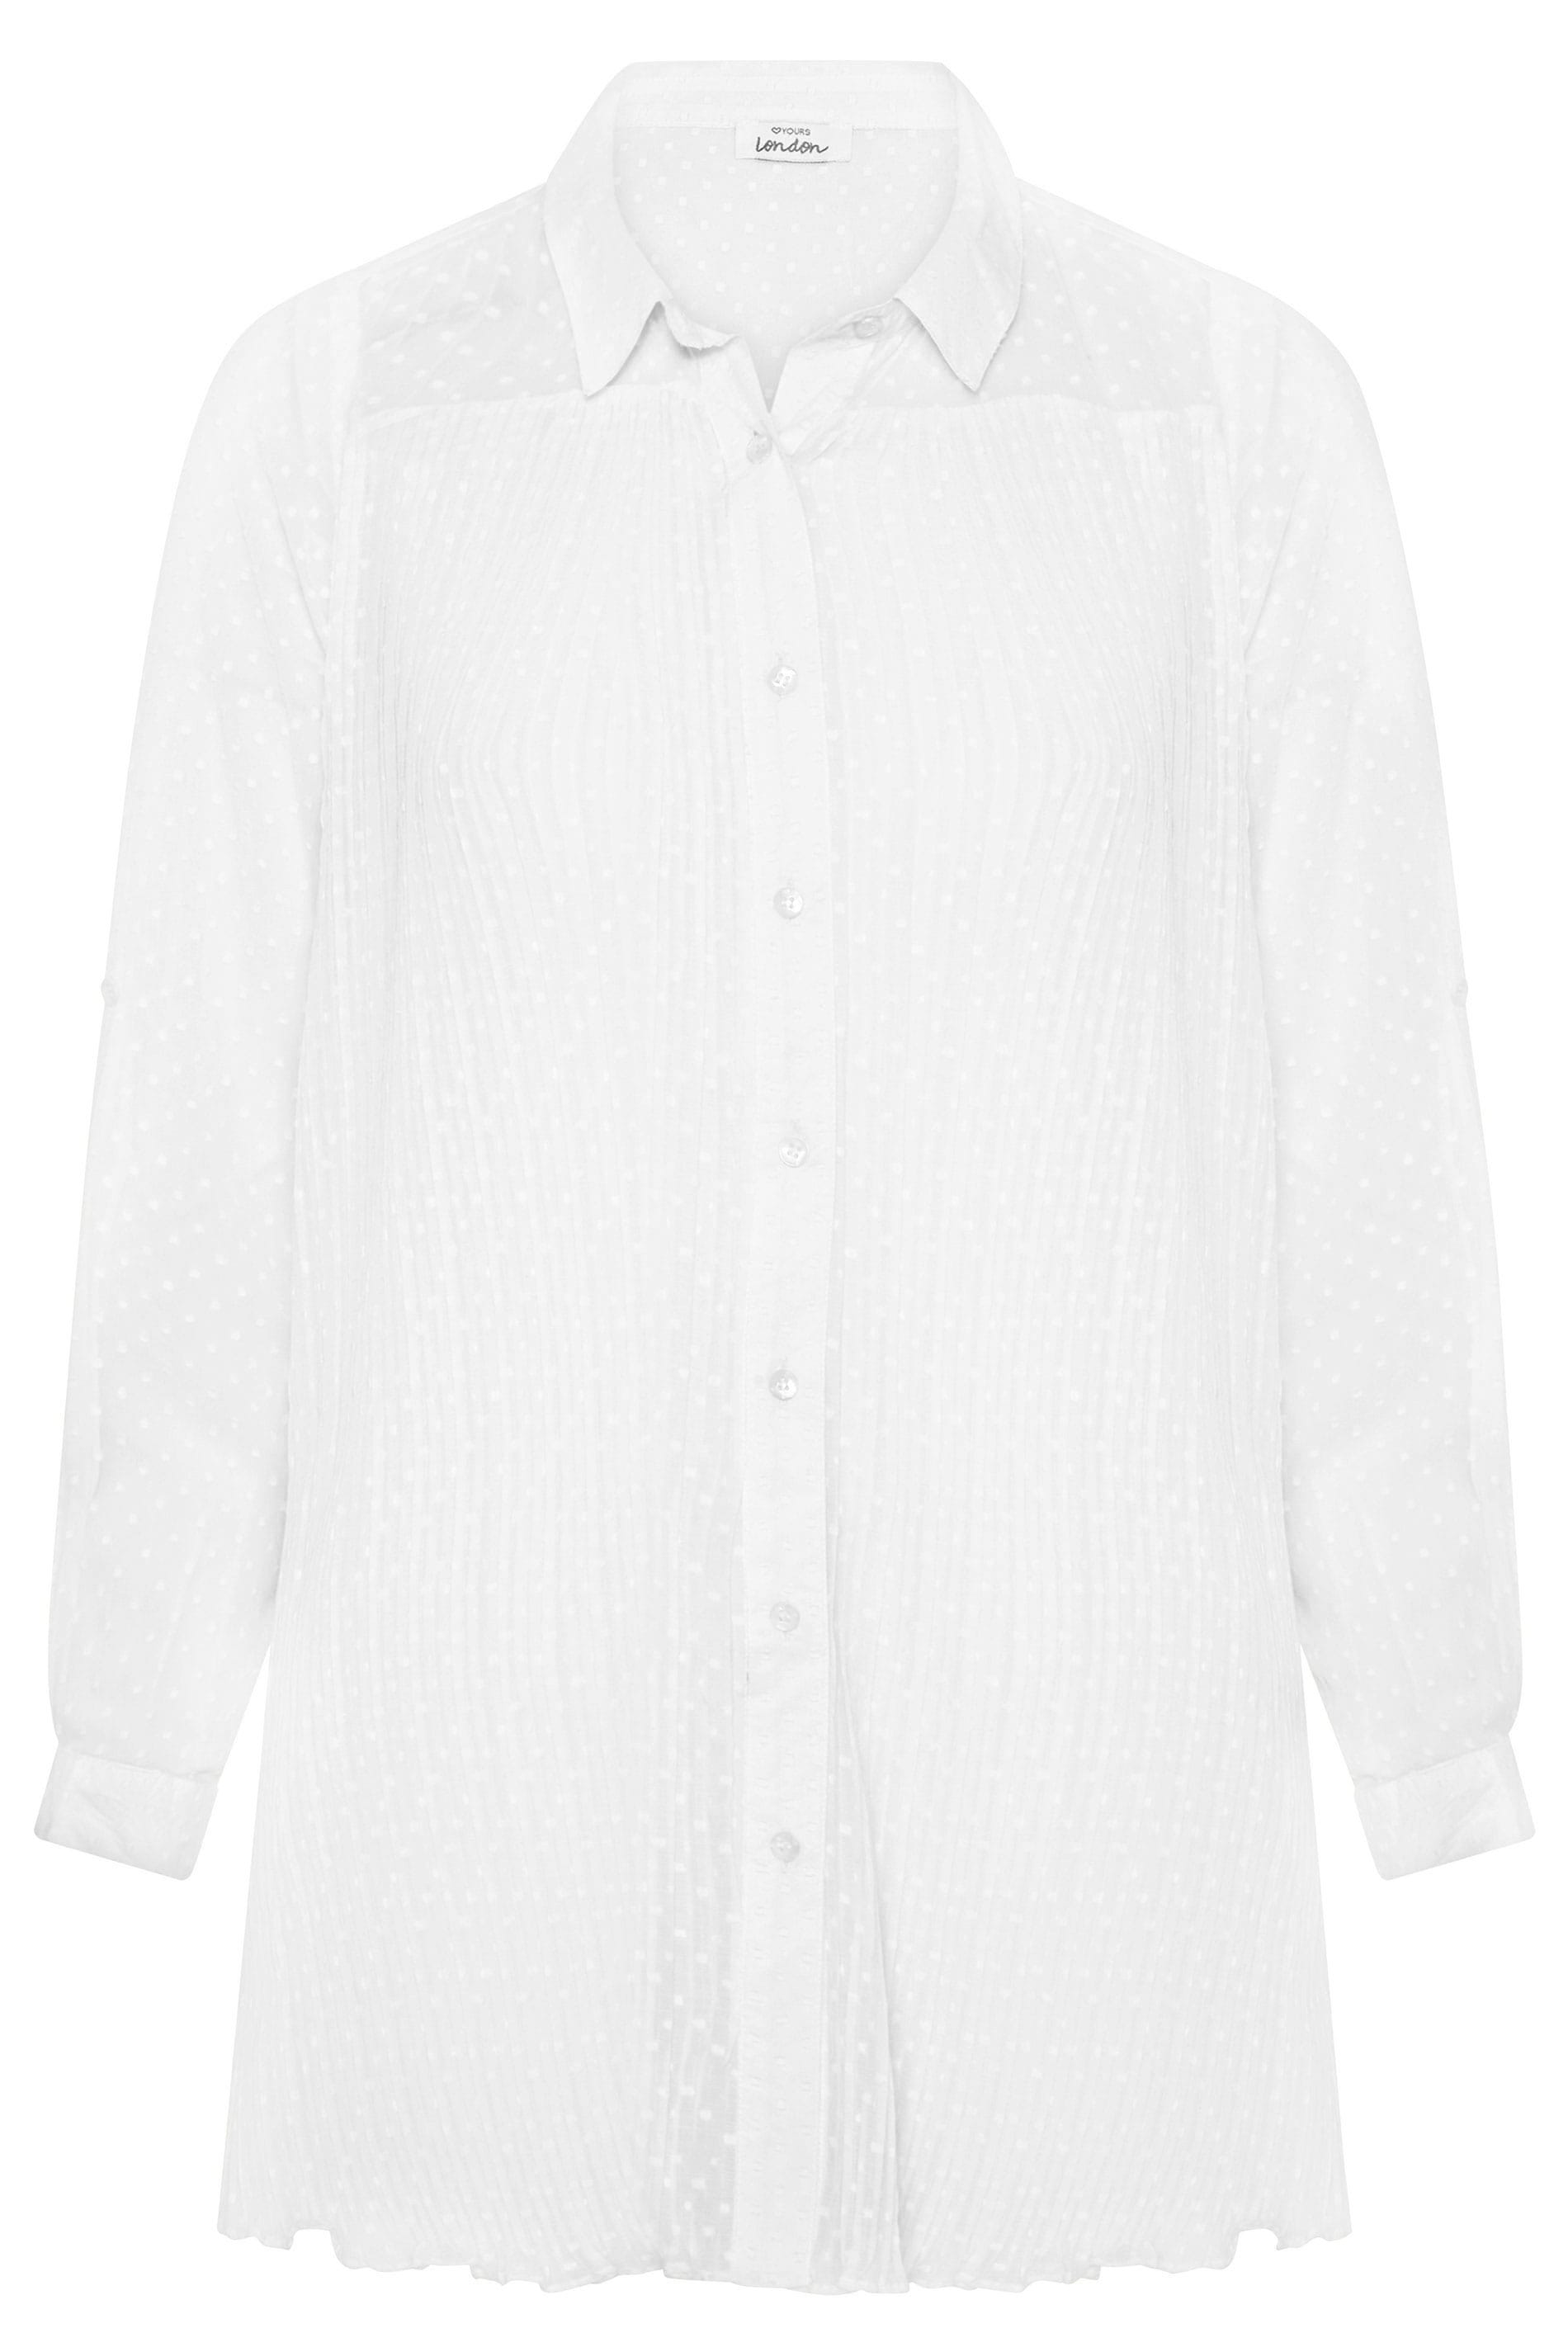 YOURS LONDON White Dobby Pleated Chiffon Shirt | Yours Clothing